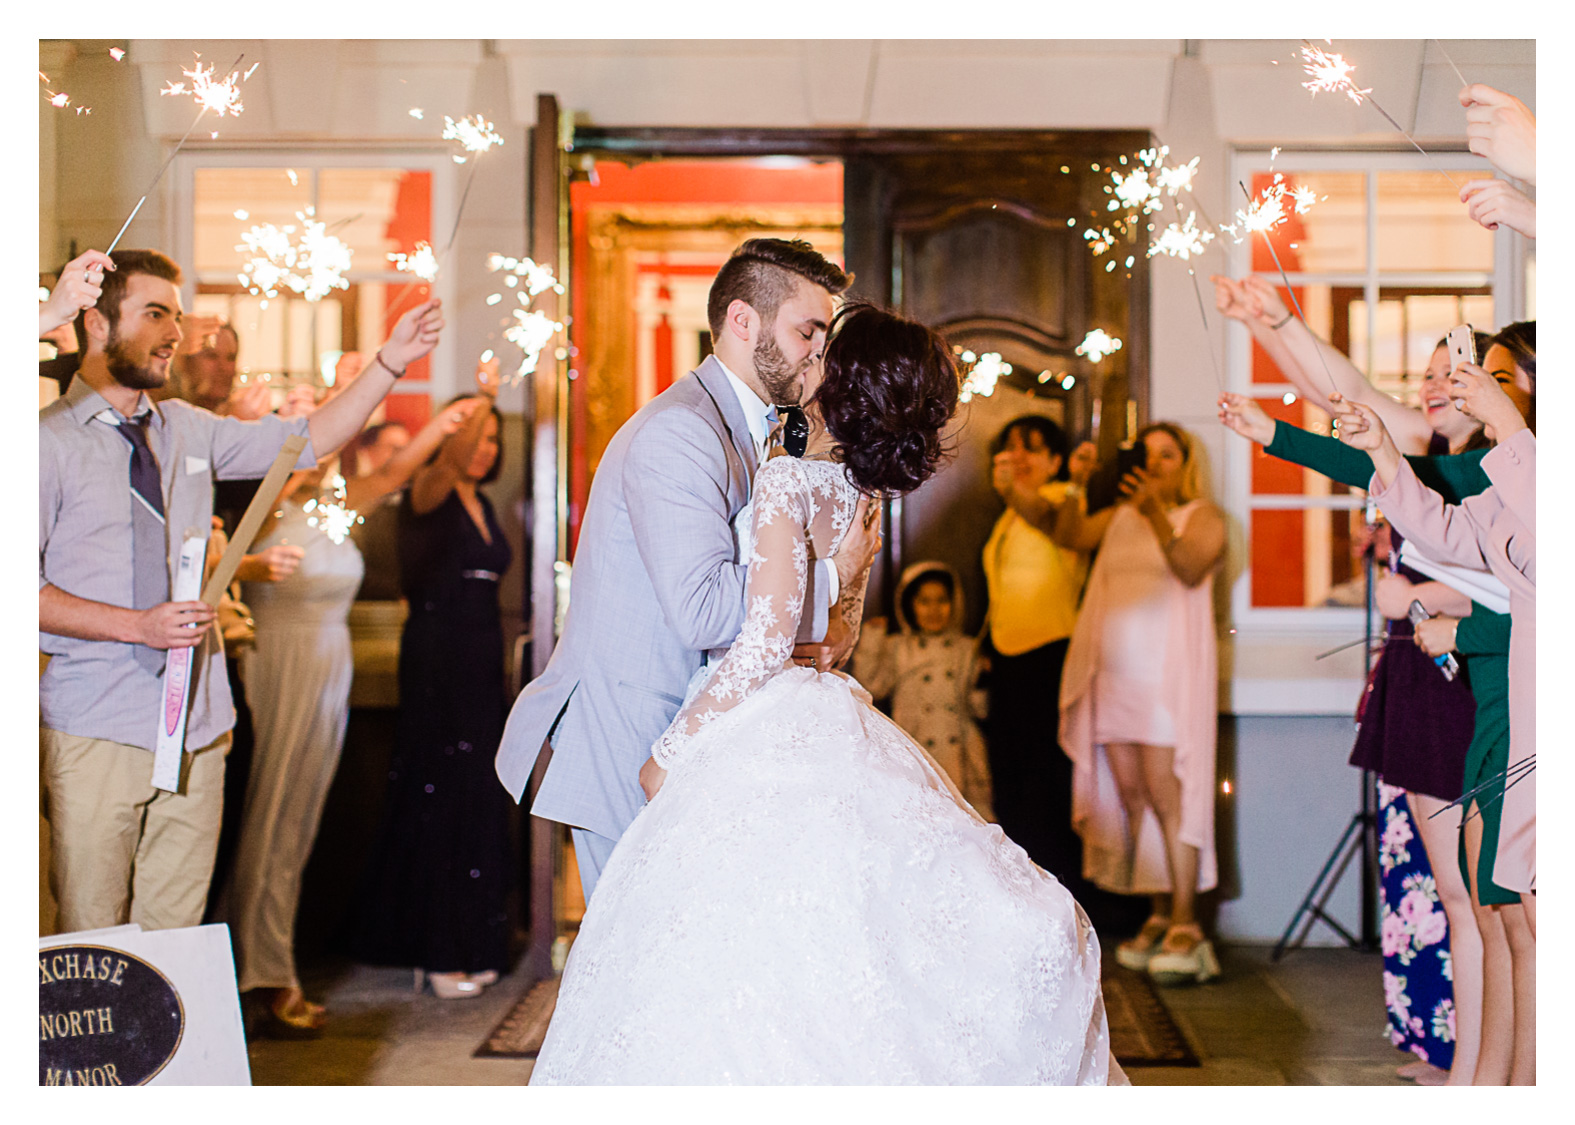 manassas-wedding-reception-sparkler-exit-bride-groom-kiss-foxchase-manor.jpg